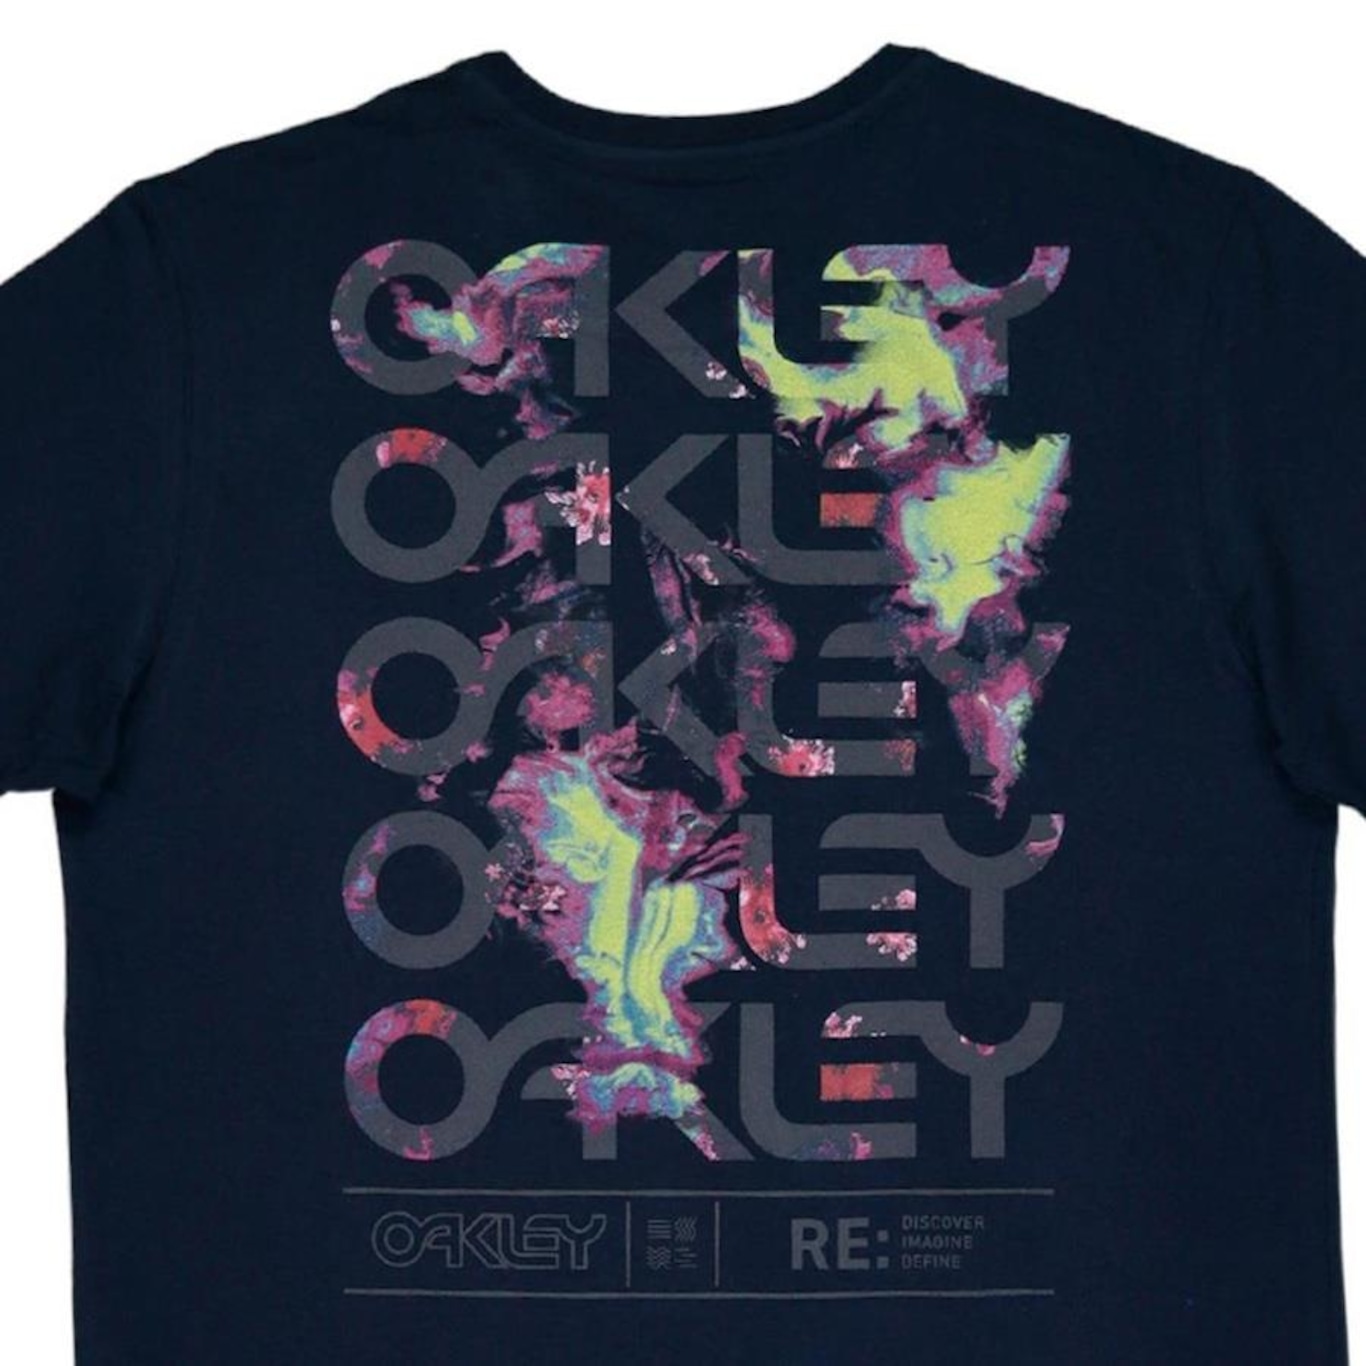 Camiseta Oakley Premium Skull Azul - Compre Agora